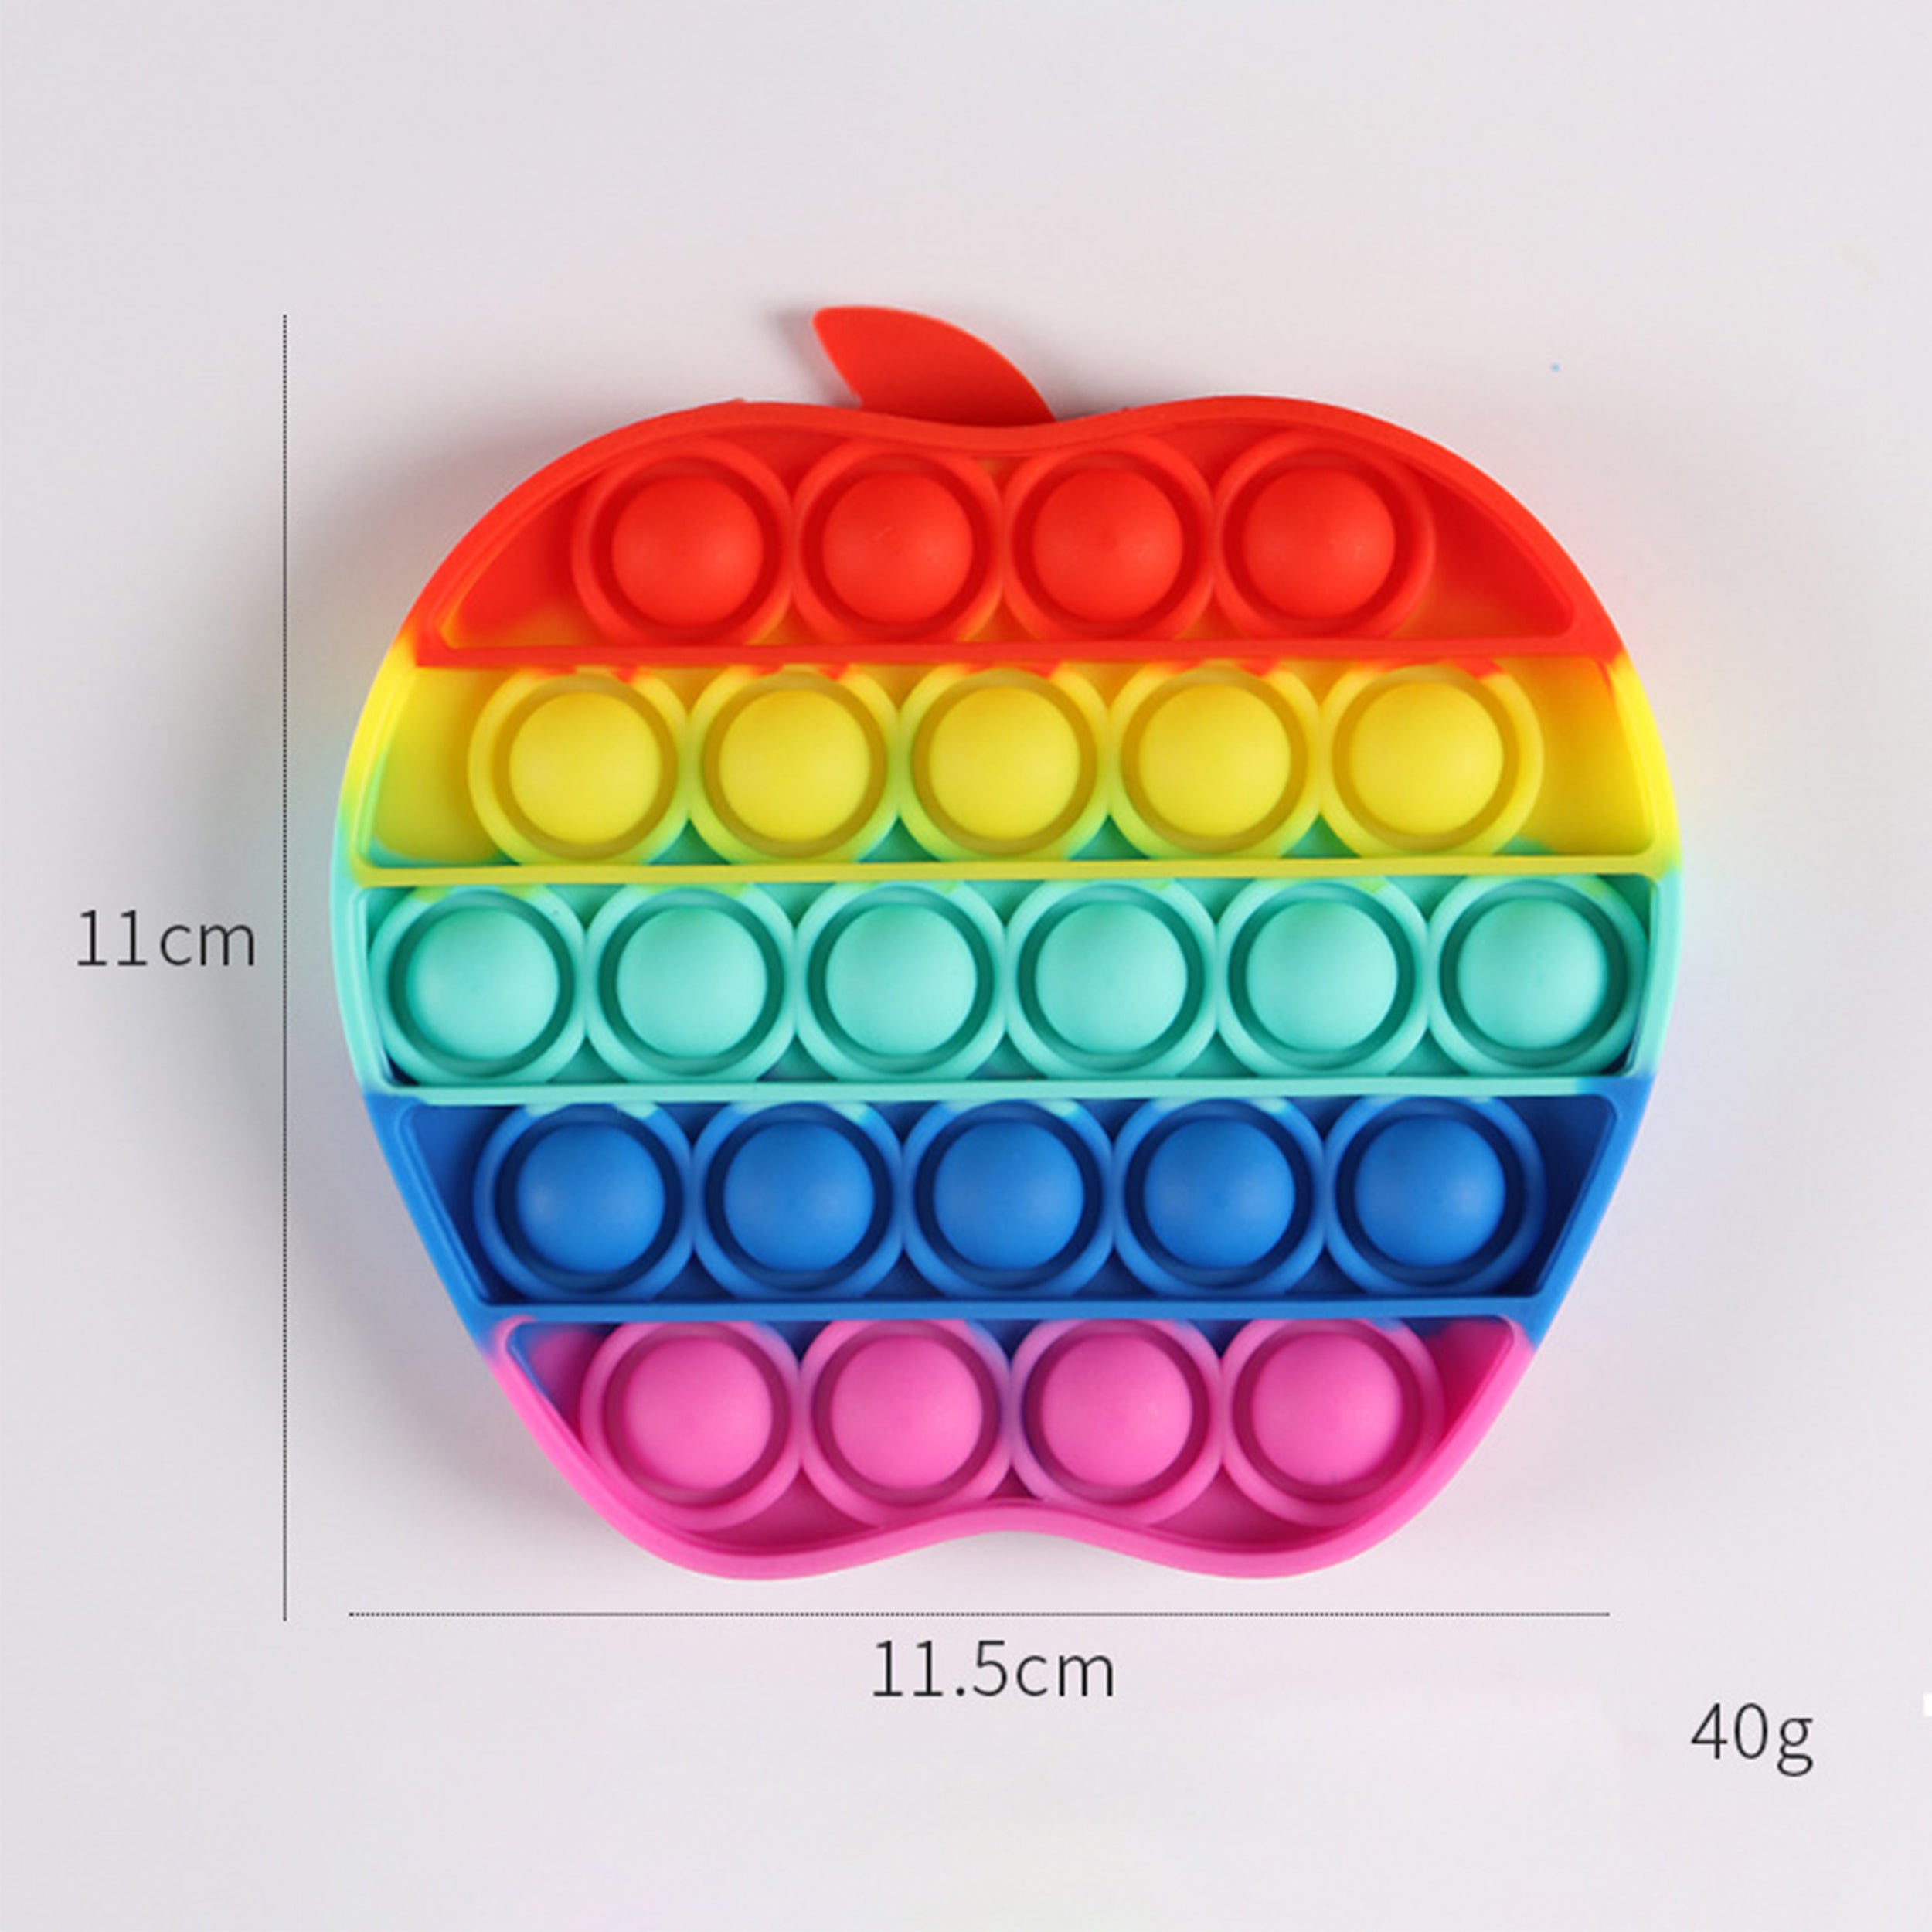 Rainbow Apple Pop It Toy for Kids - Sensory Fidget Toy